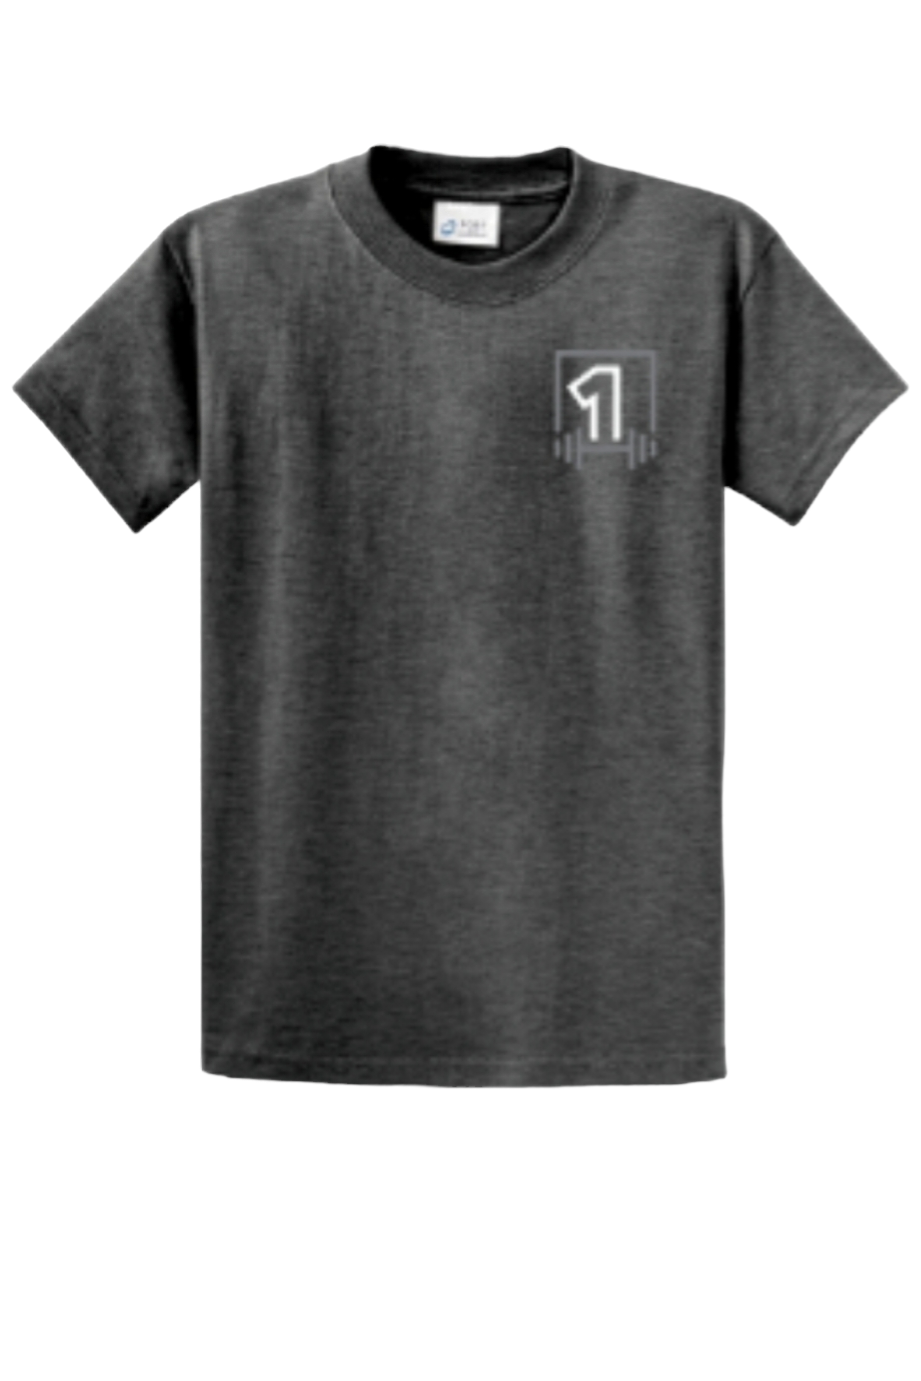 Black Tshirt - Short Sleeve Tee - Fitness Apparel